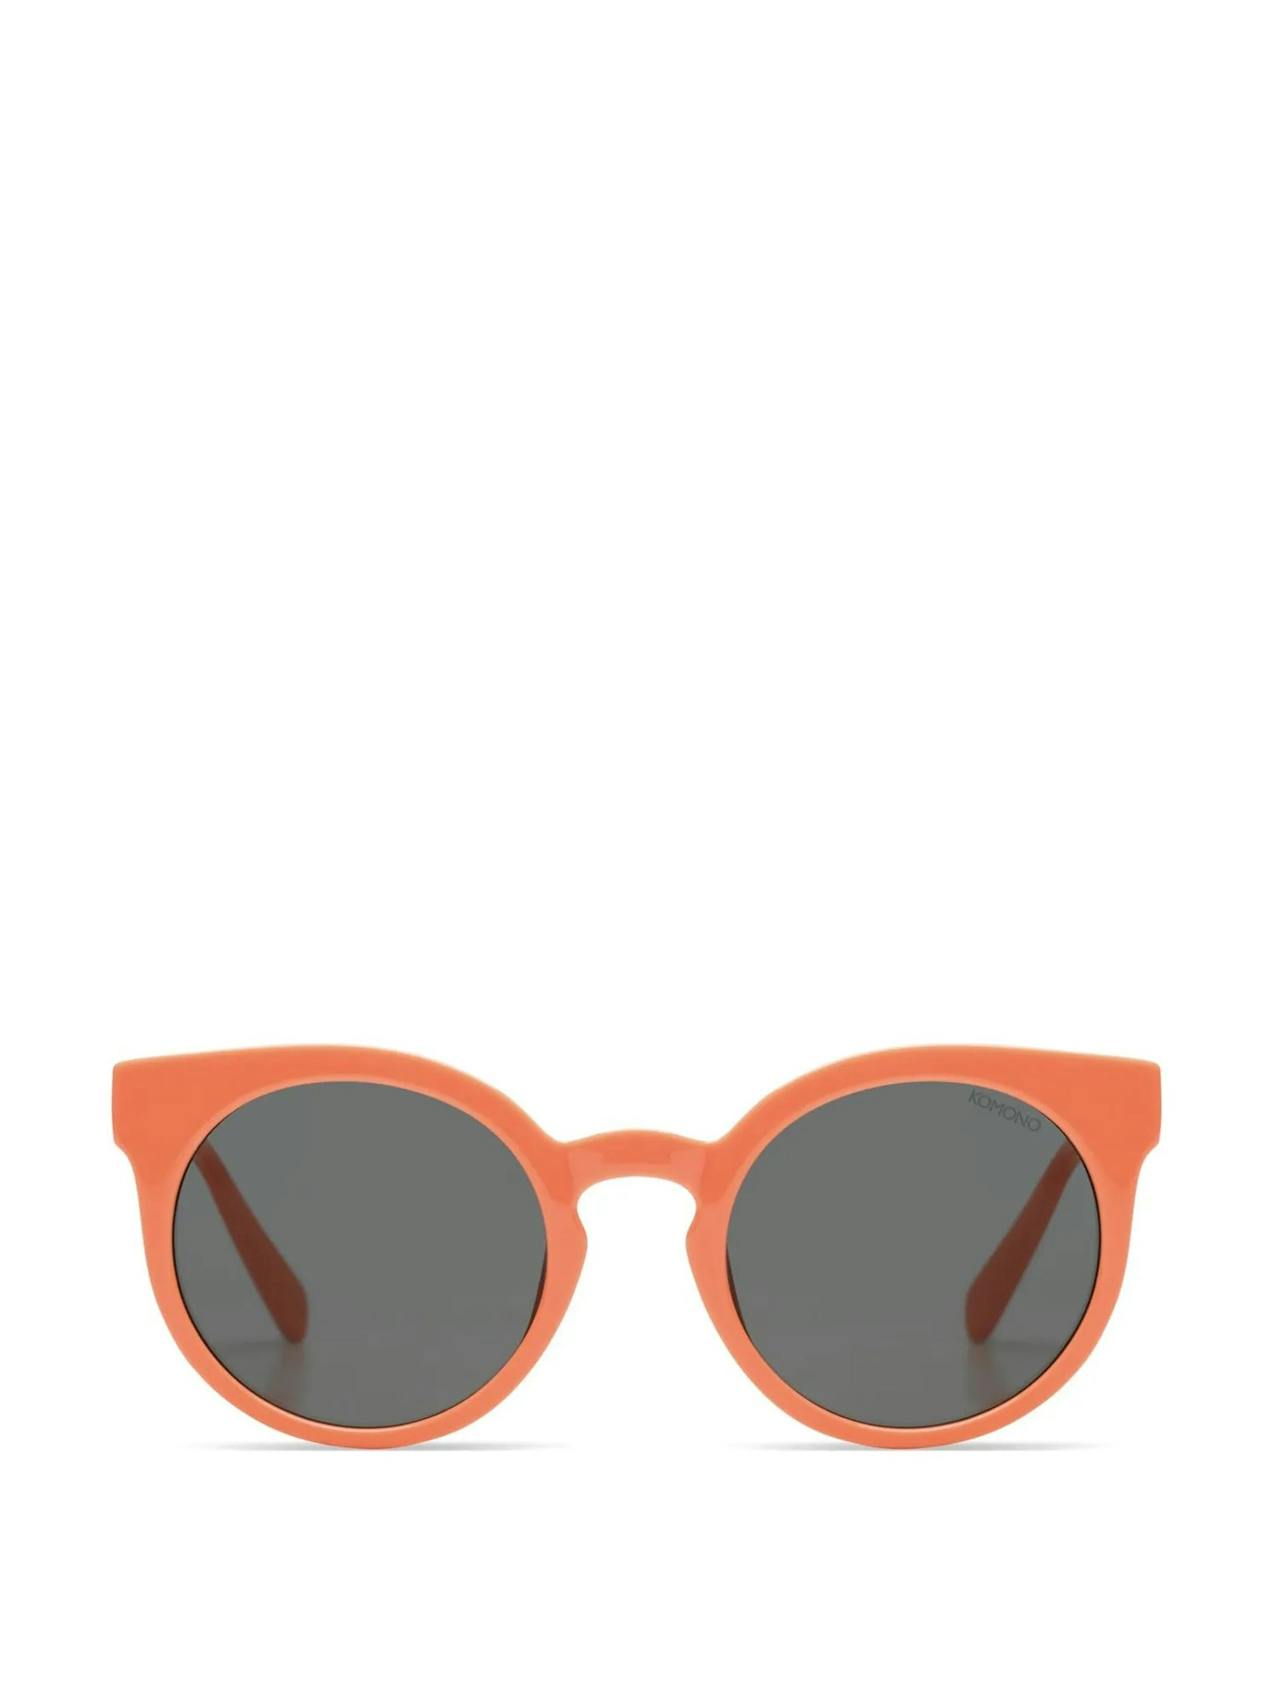 Lulu Junior sunglasses